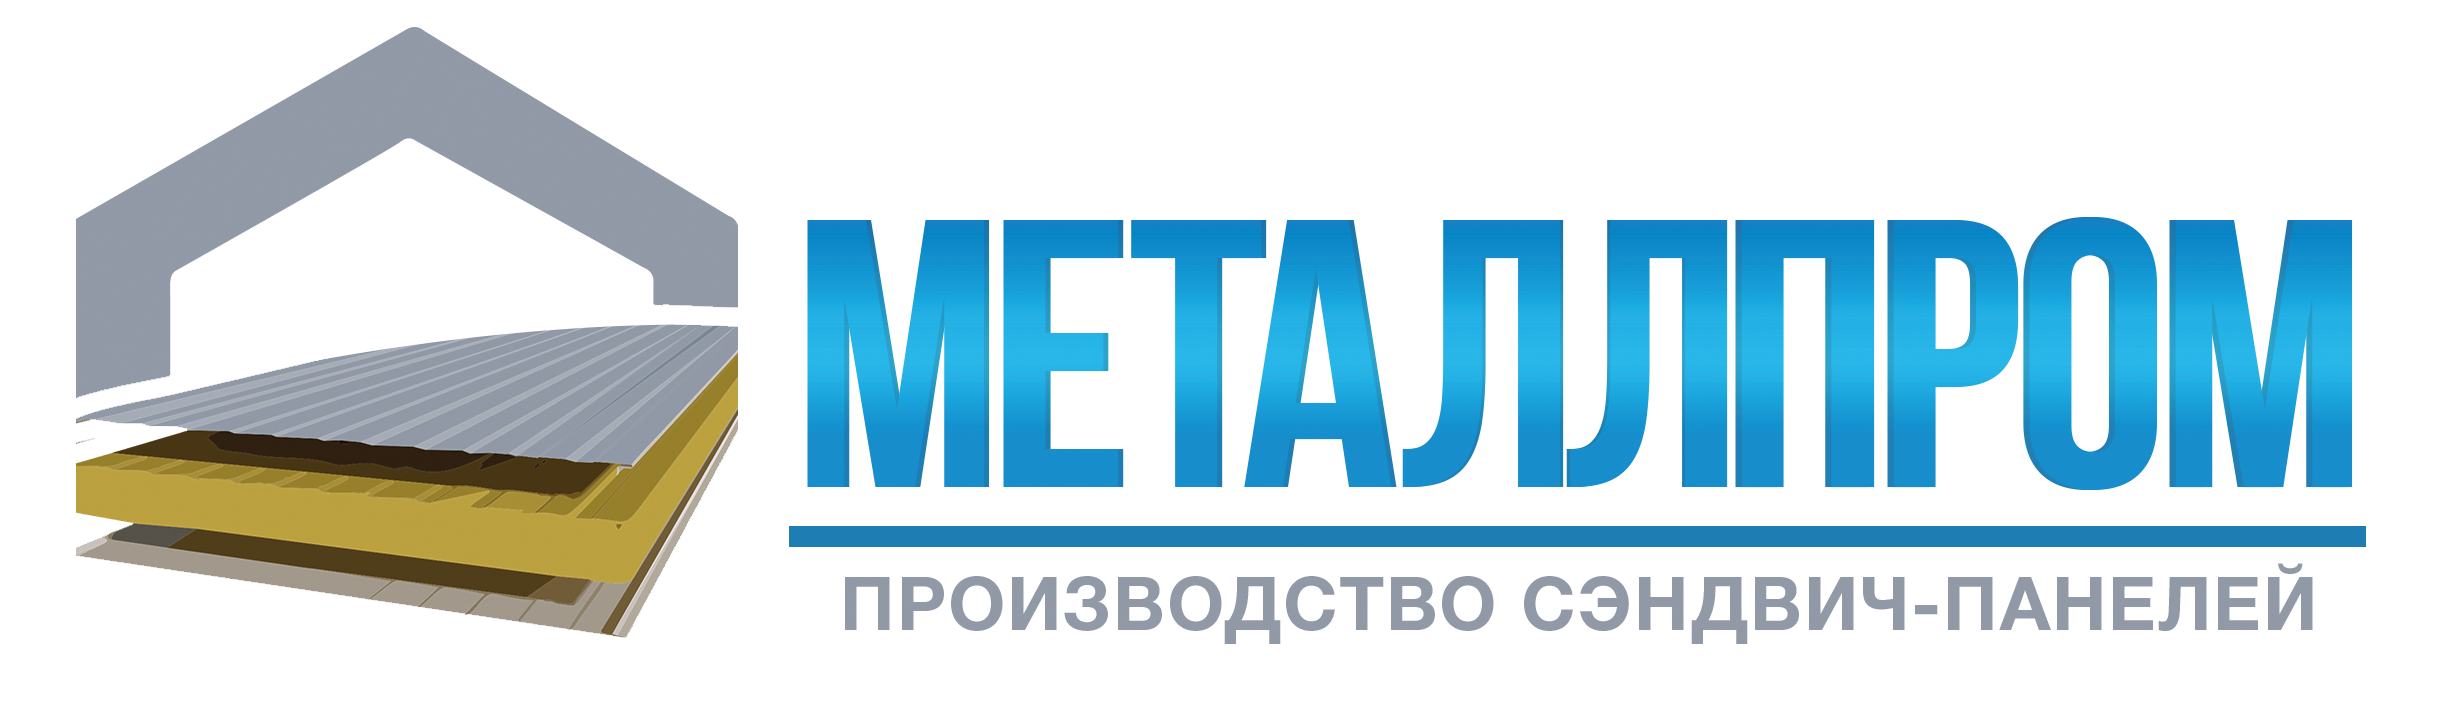 Металлпром